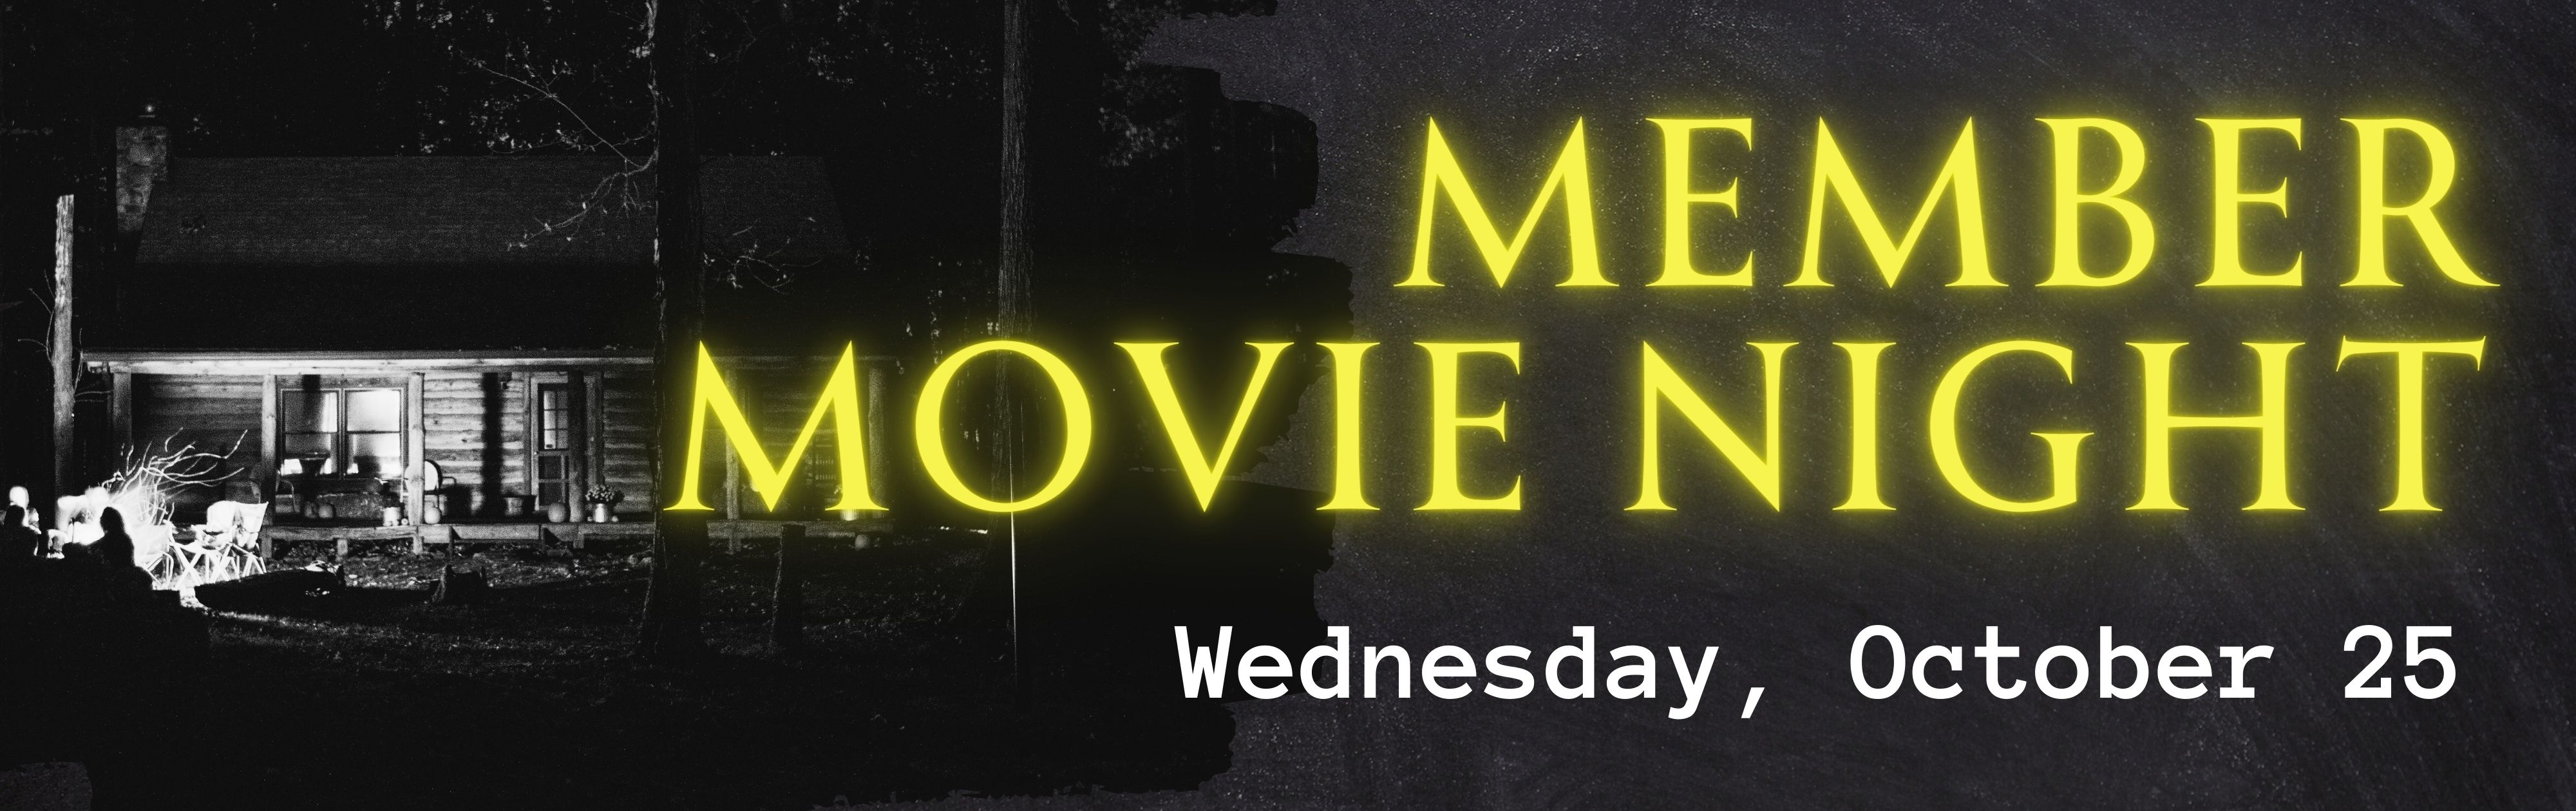 Member movie night banner